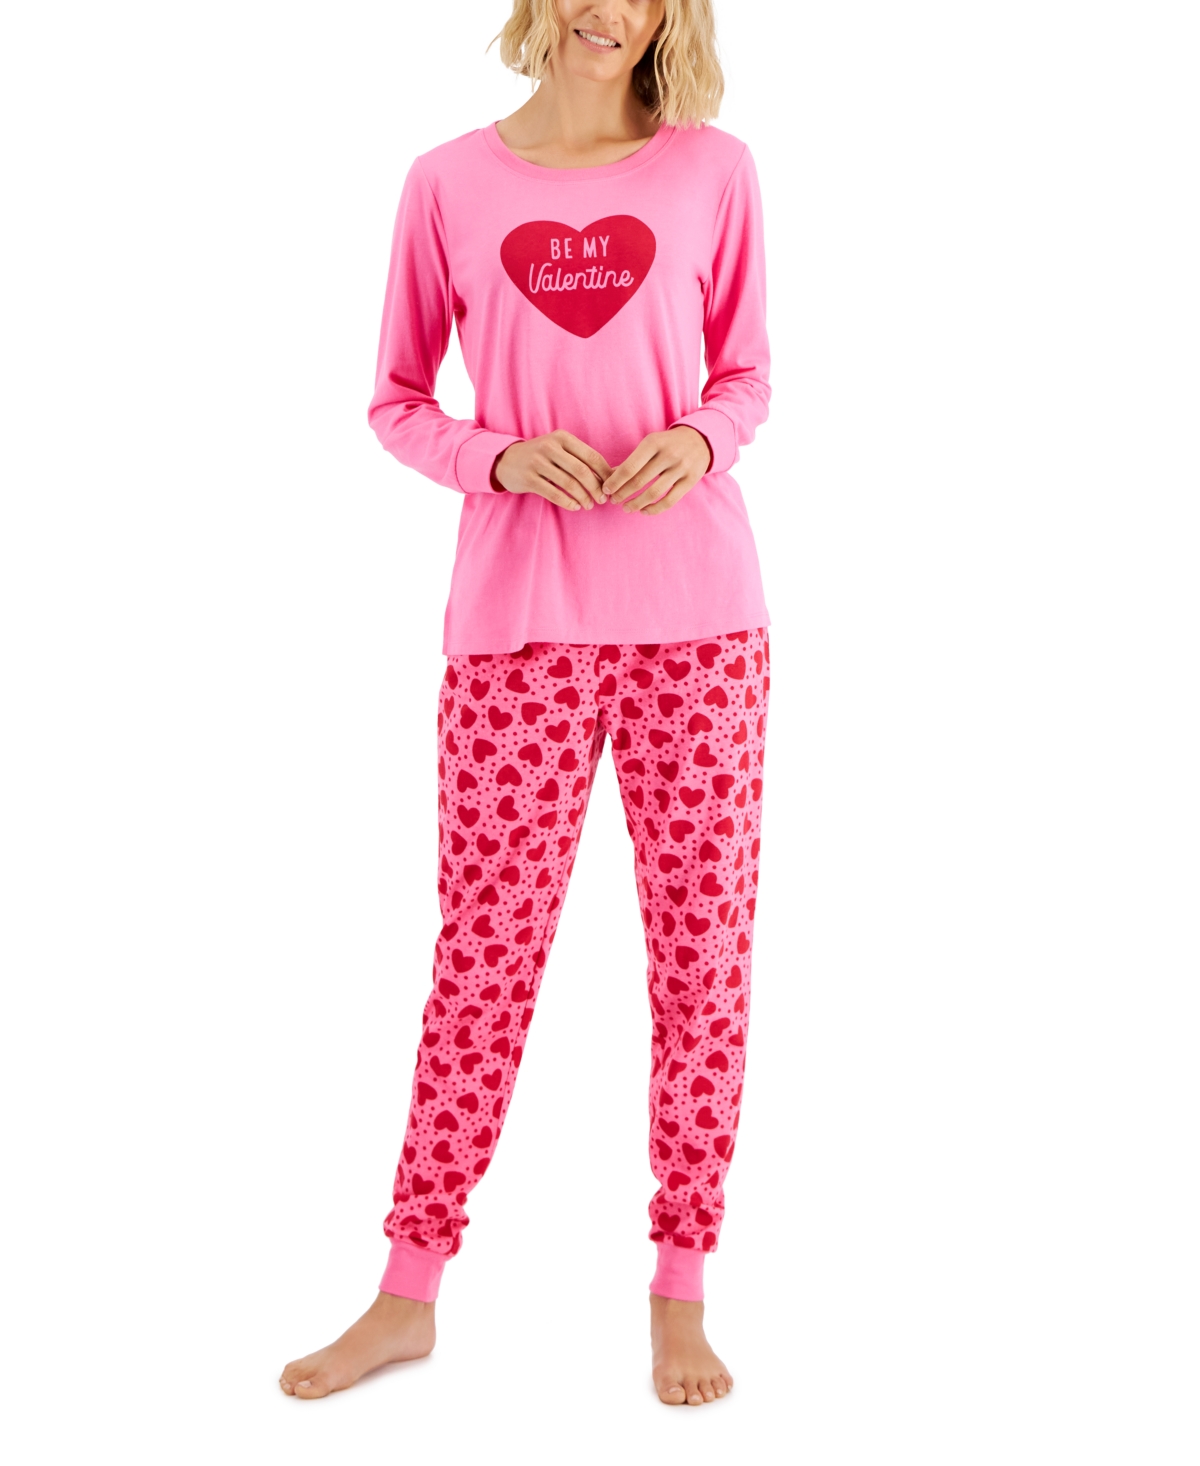 Family Pajamas Women's Be My Valentine Mix It Pajama Set, Created for Macy's